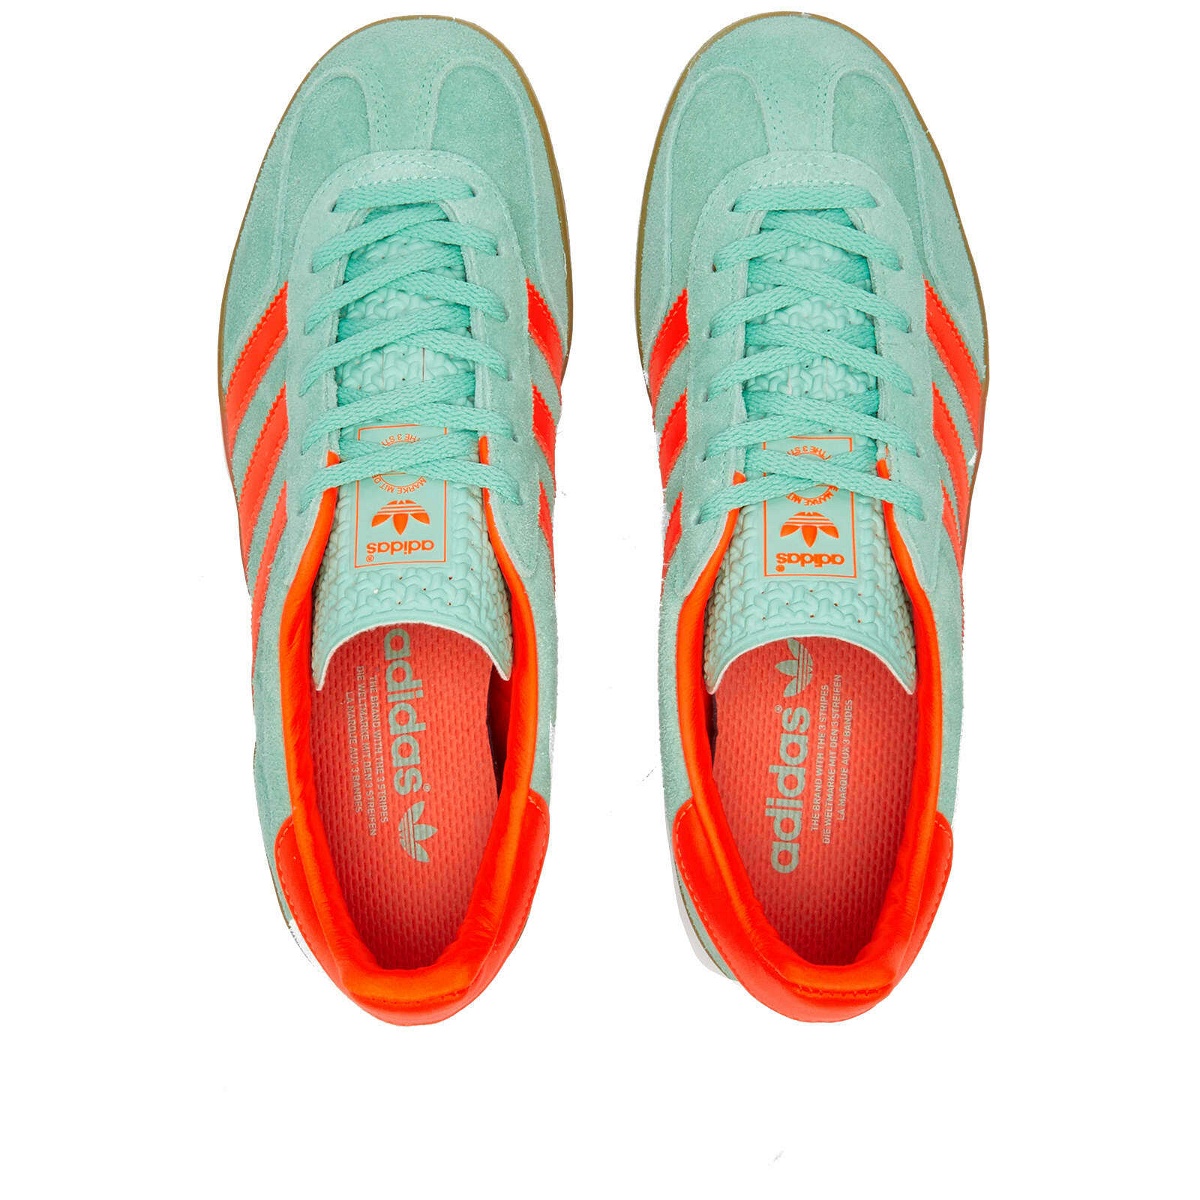 Adidas Gazelle Indoor W Pulse Sneakers adidas in Mint/Orange